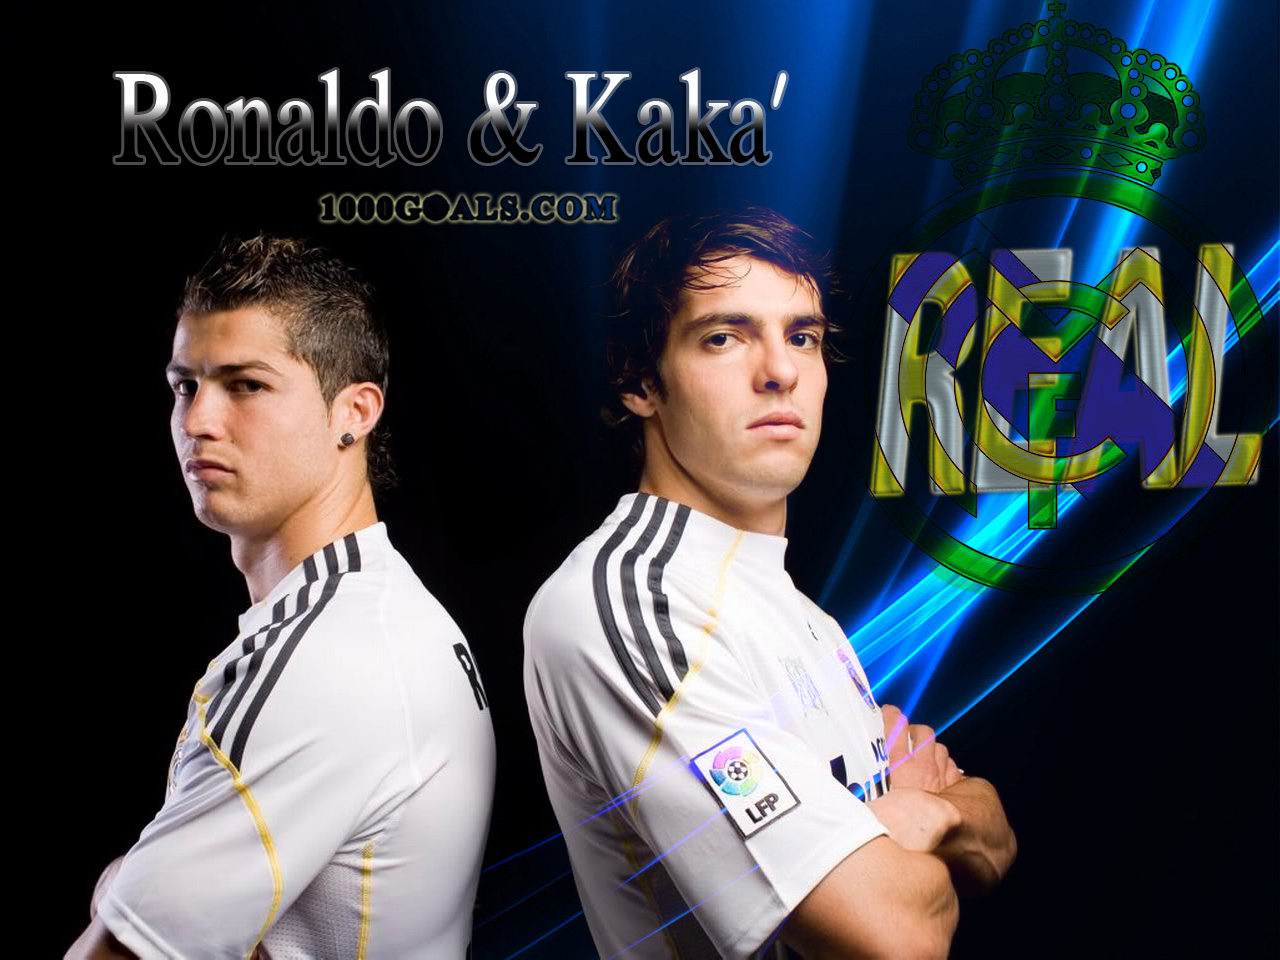 Kaka Wallpaper Real Madrid